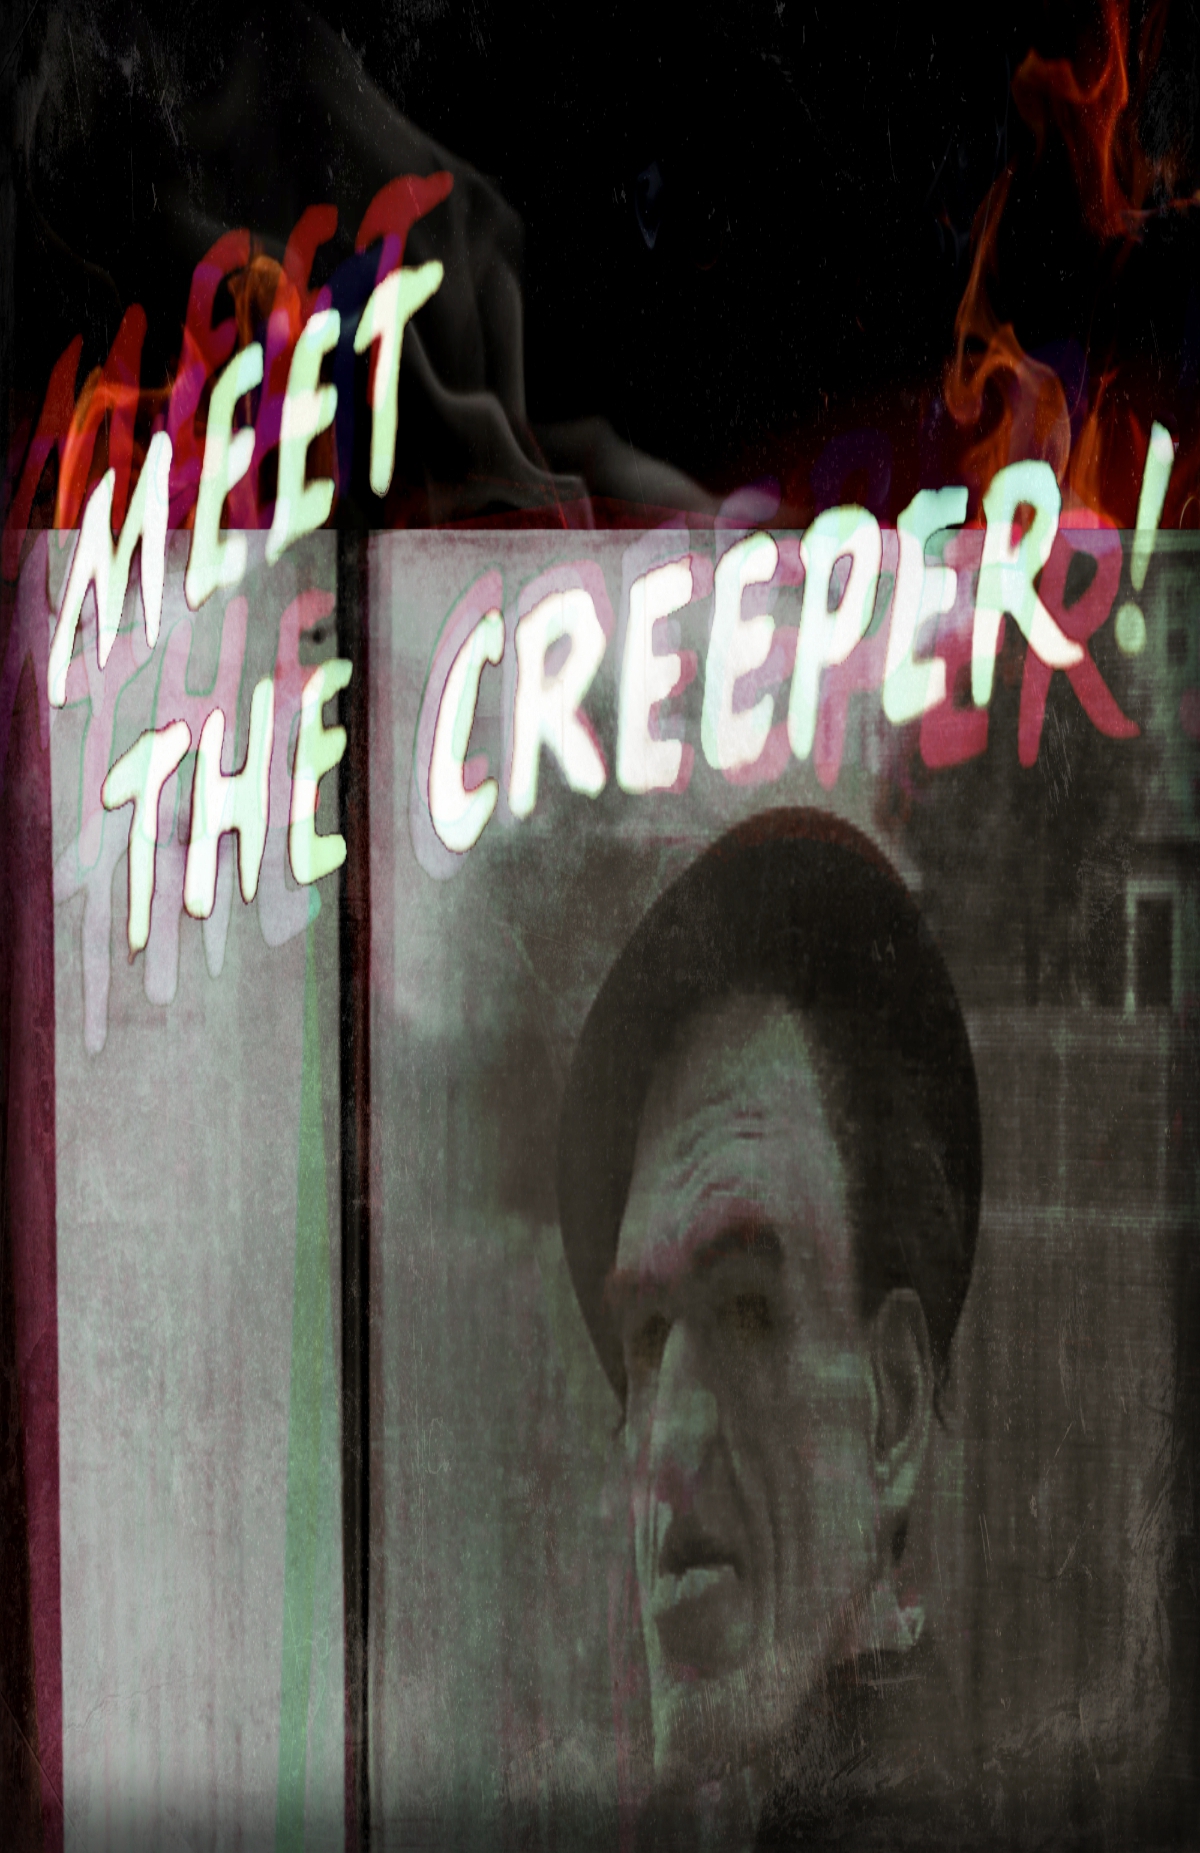 Meet the Creeper!